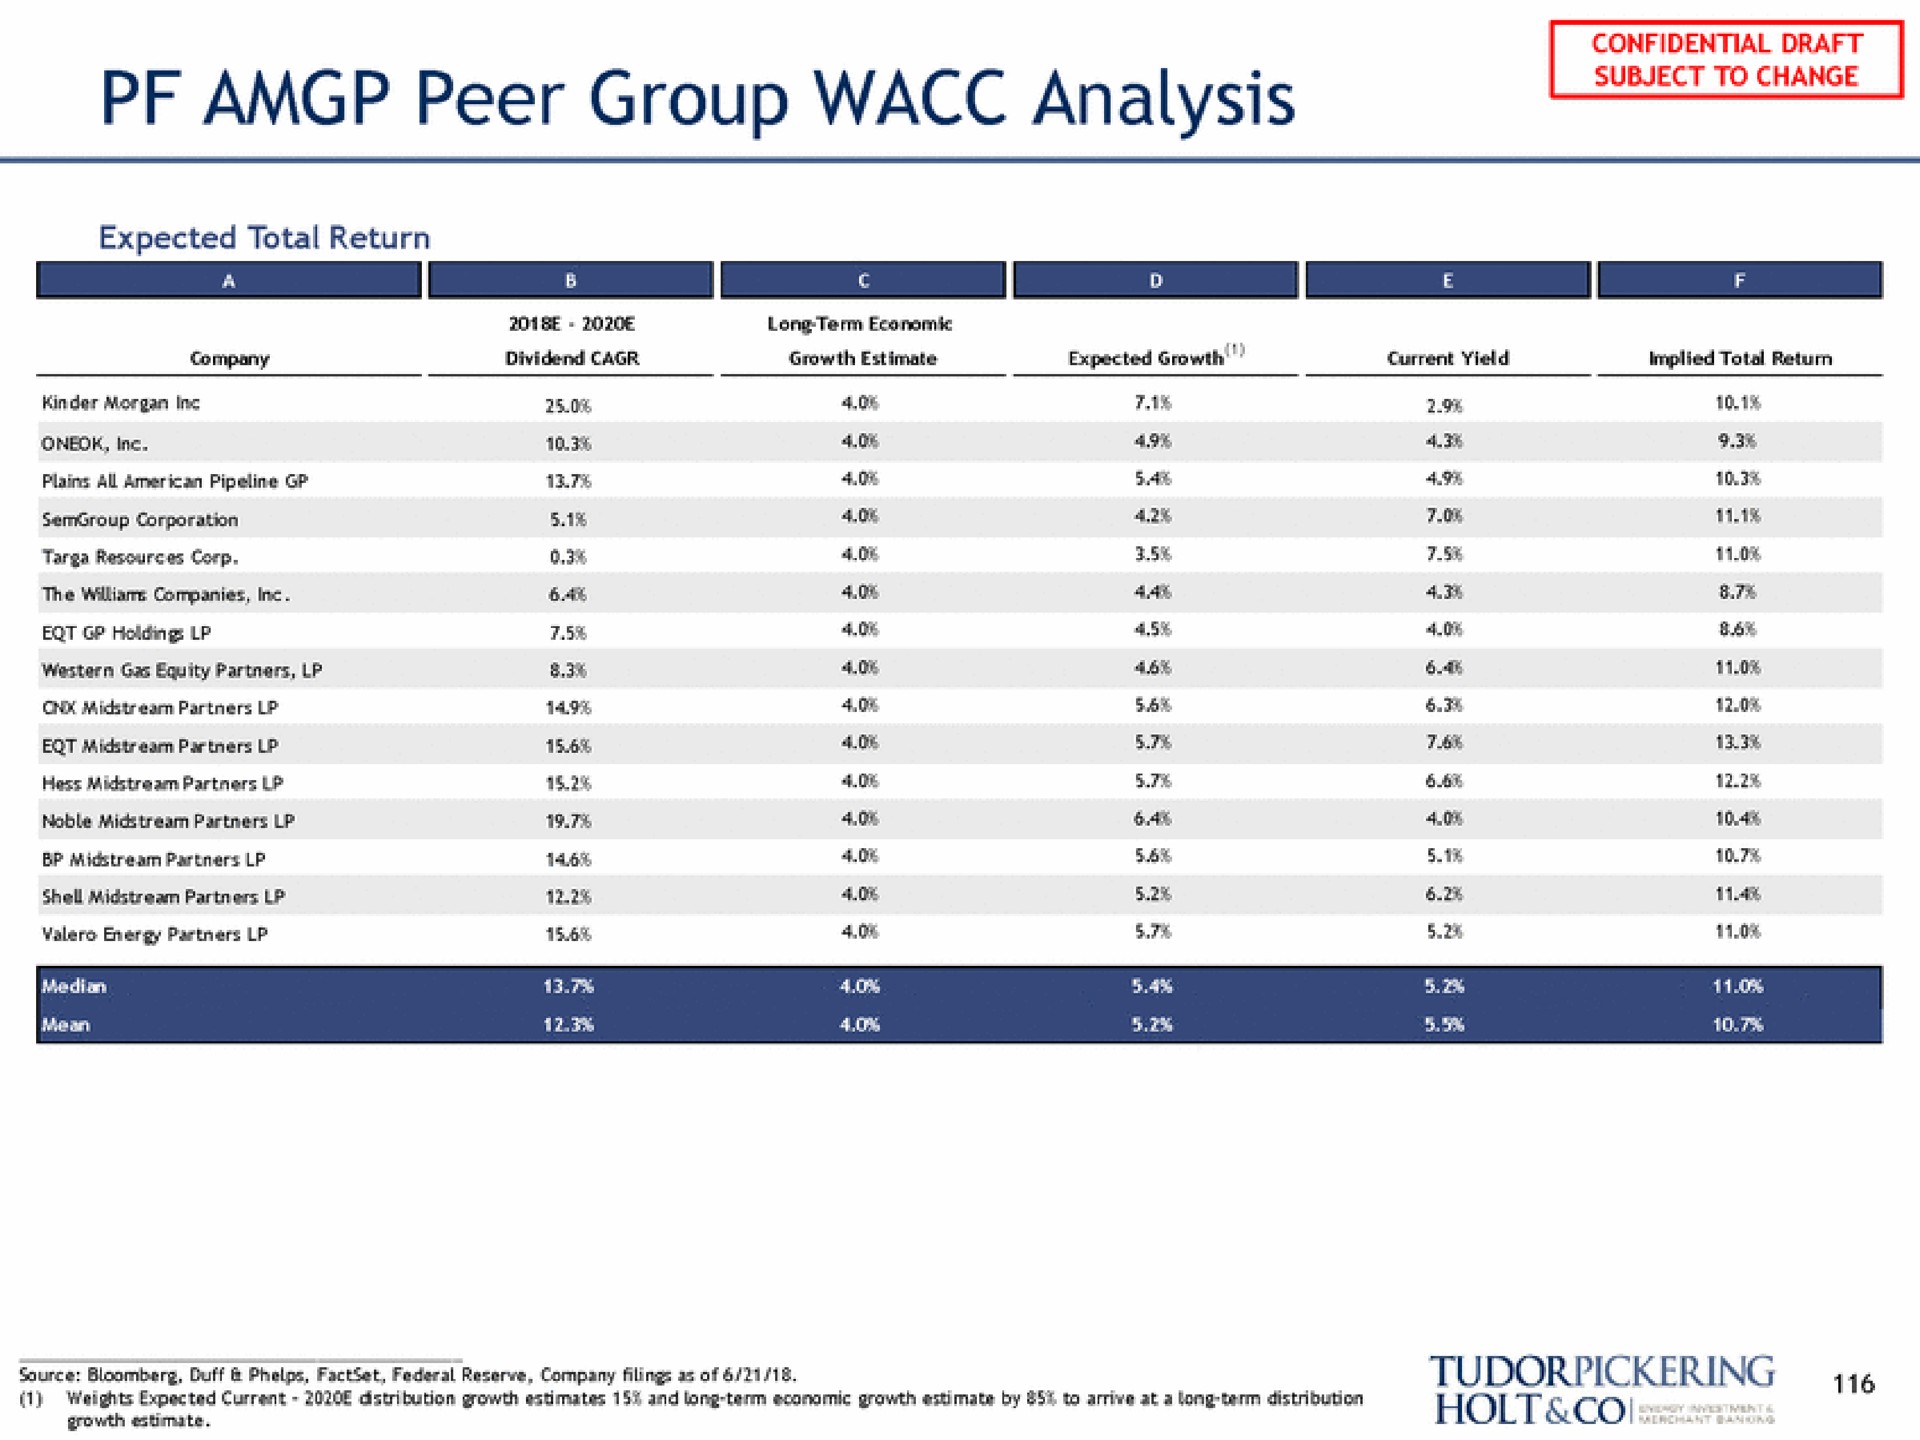 peer group analysis a | Tudor, Pickering, Holt & Co